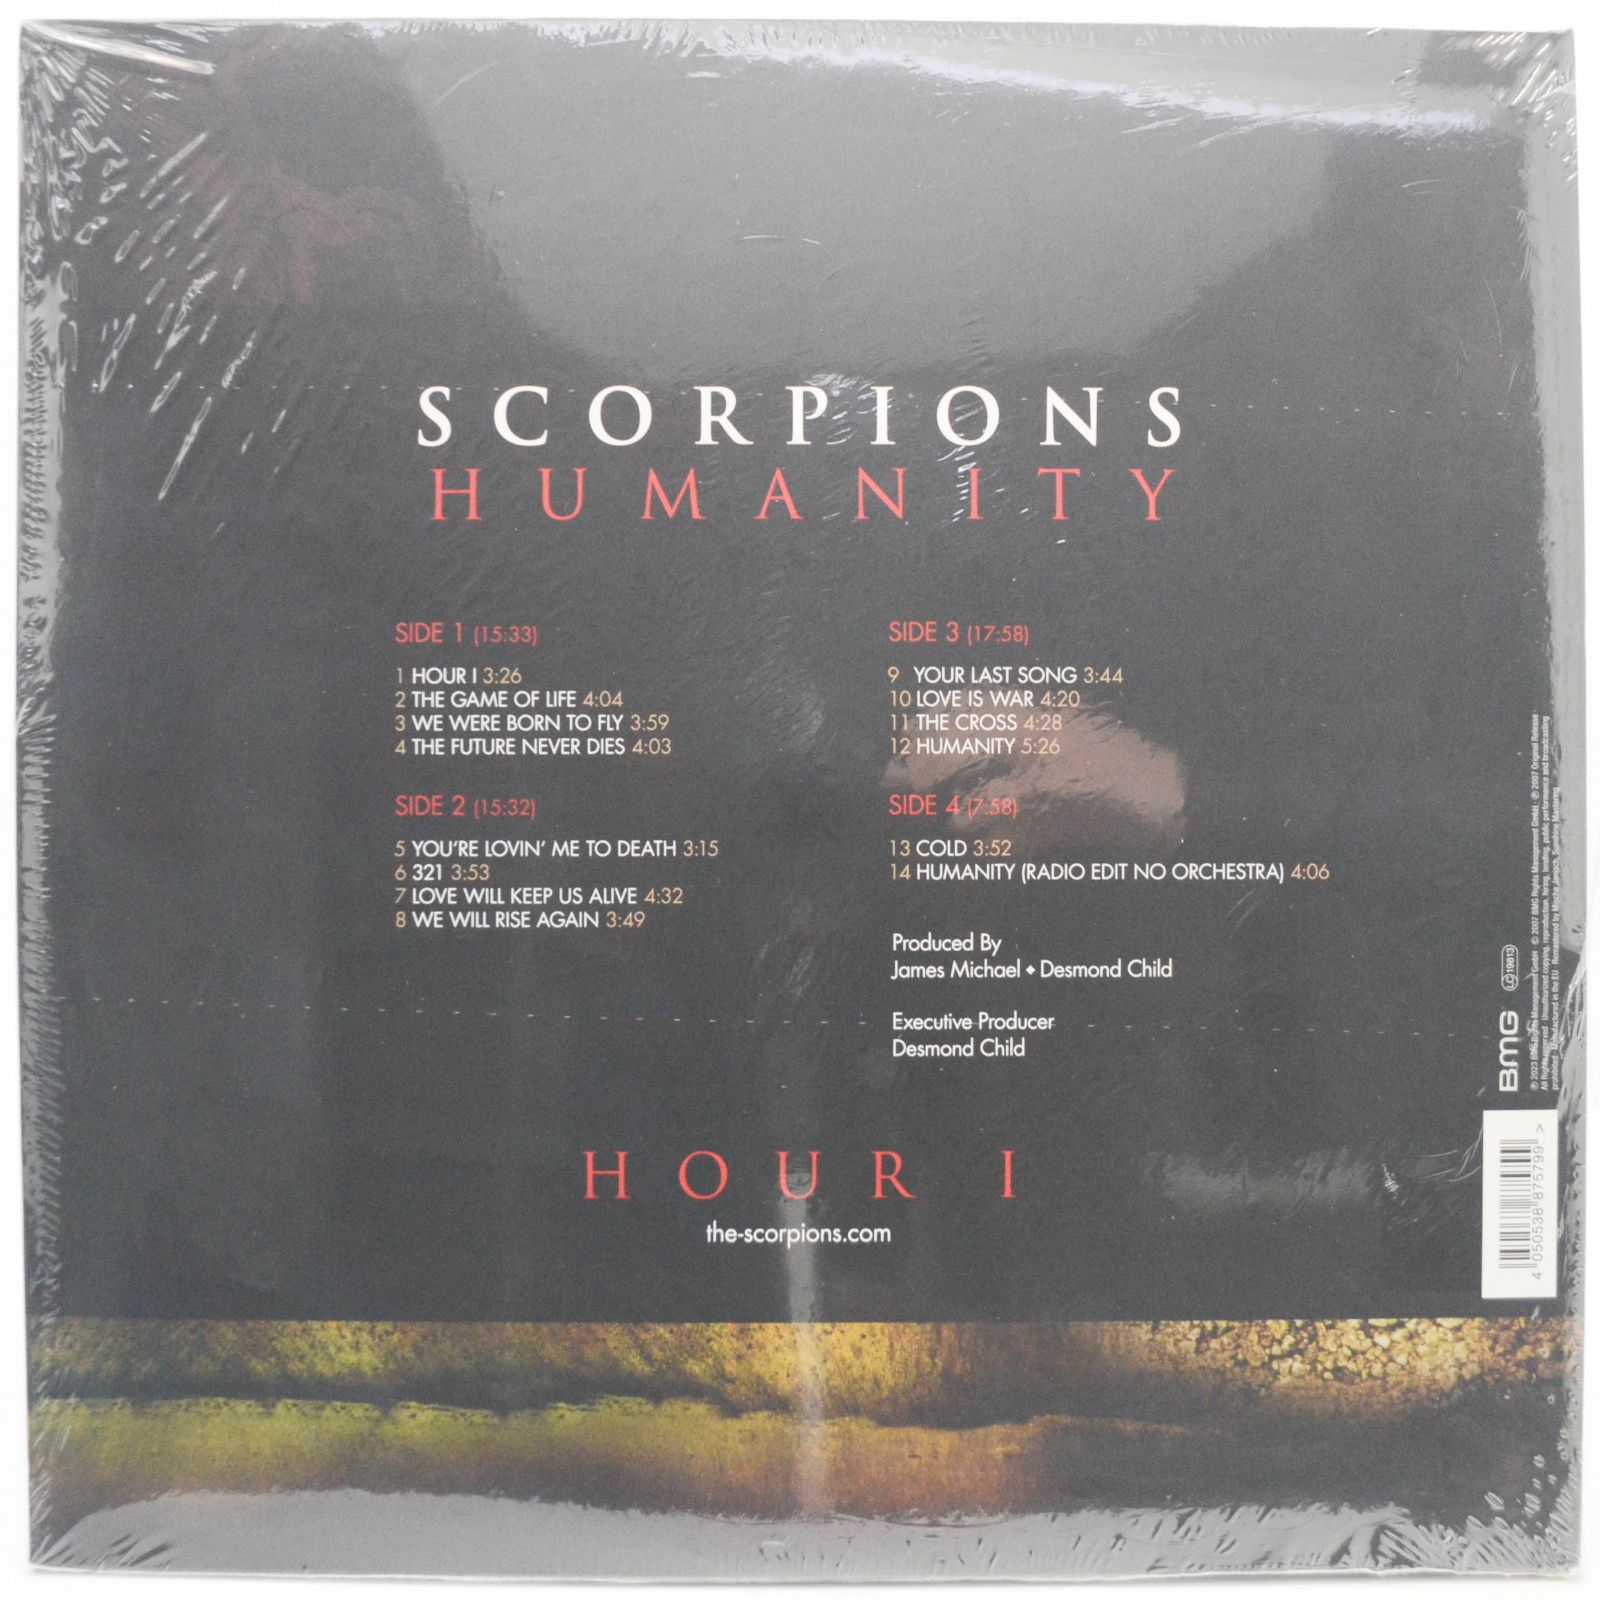 Scorpions — Humanity - Hour I (2LP), 2007